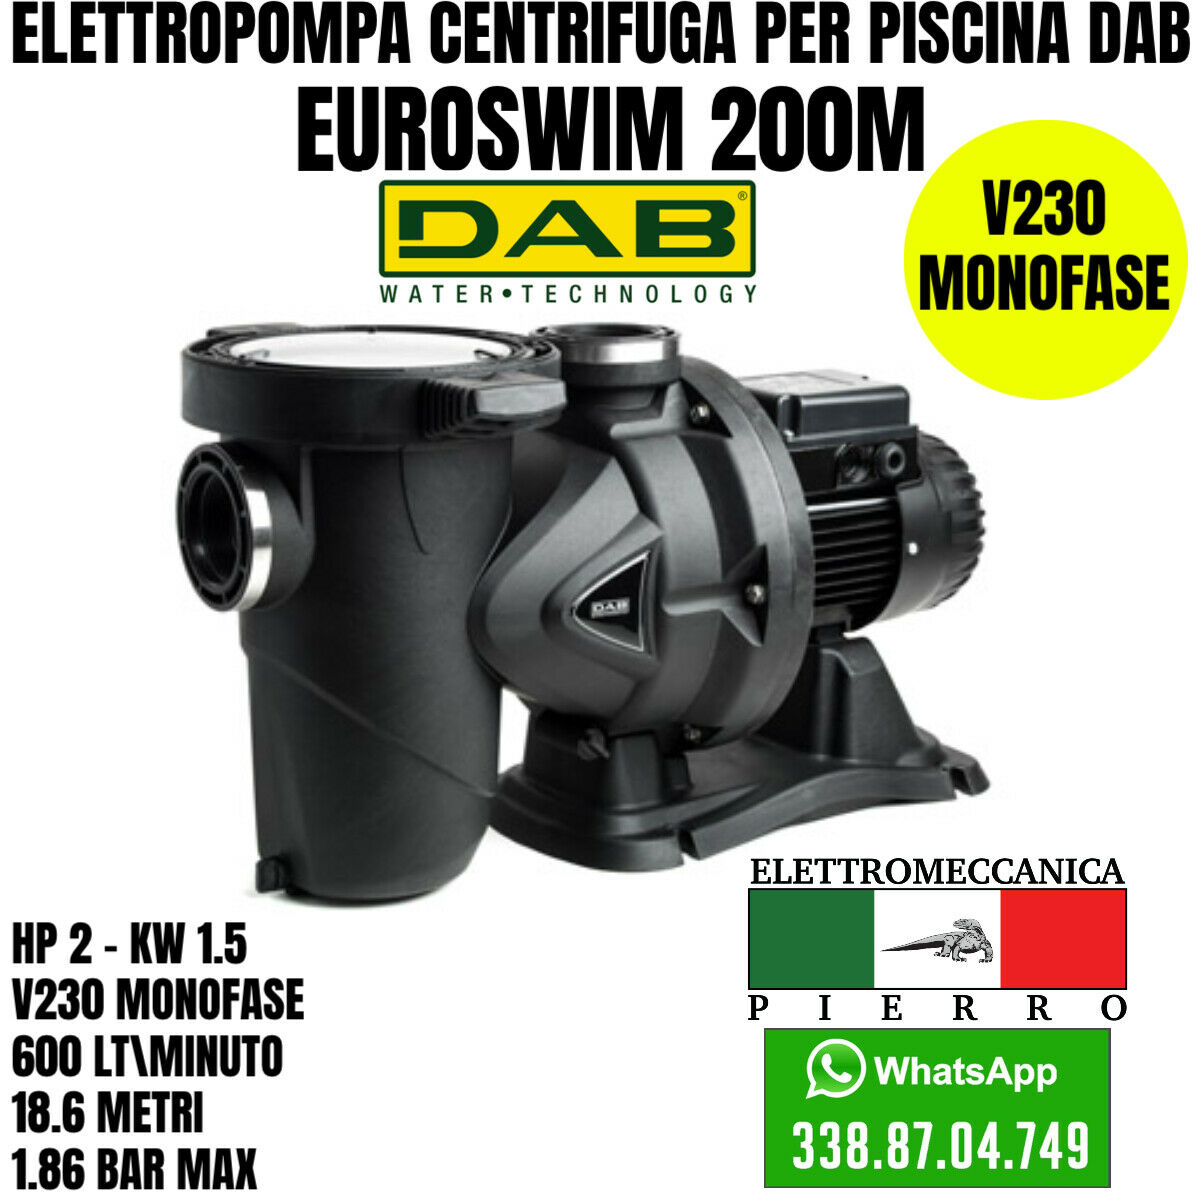 Pompa per piscina DAB EuroSwim EuroPro Elettropompa centrifuga piscine HP 0/3 Logo Elettromeccanica Pierro Elettromeccanica Express Assistenza EuroSwim 200M Hp 2 - KW 1.5 600LT/Minuto 18,6 Metri 1,86 BAR MAX V230 (2694573)